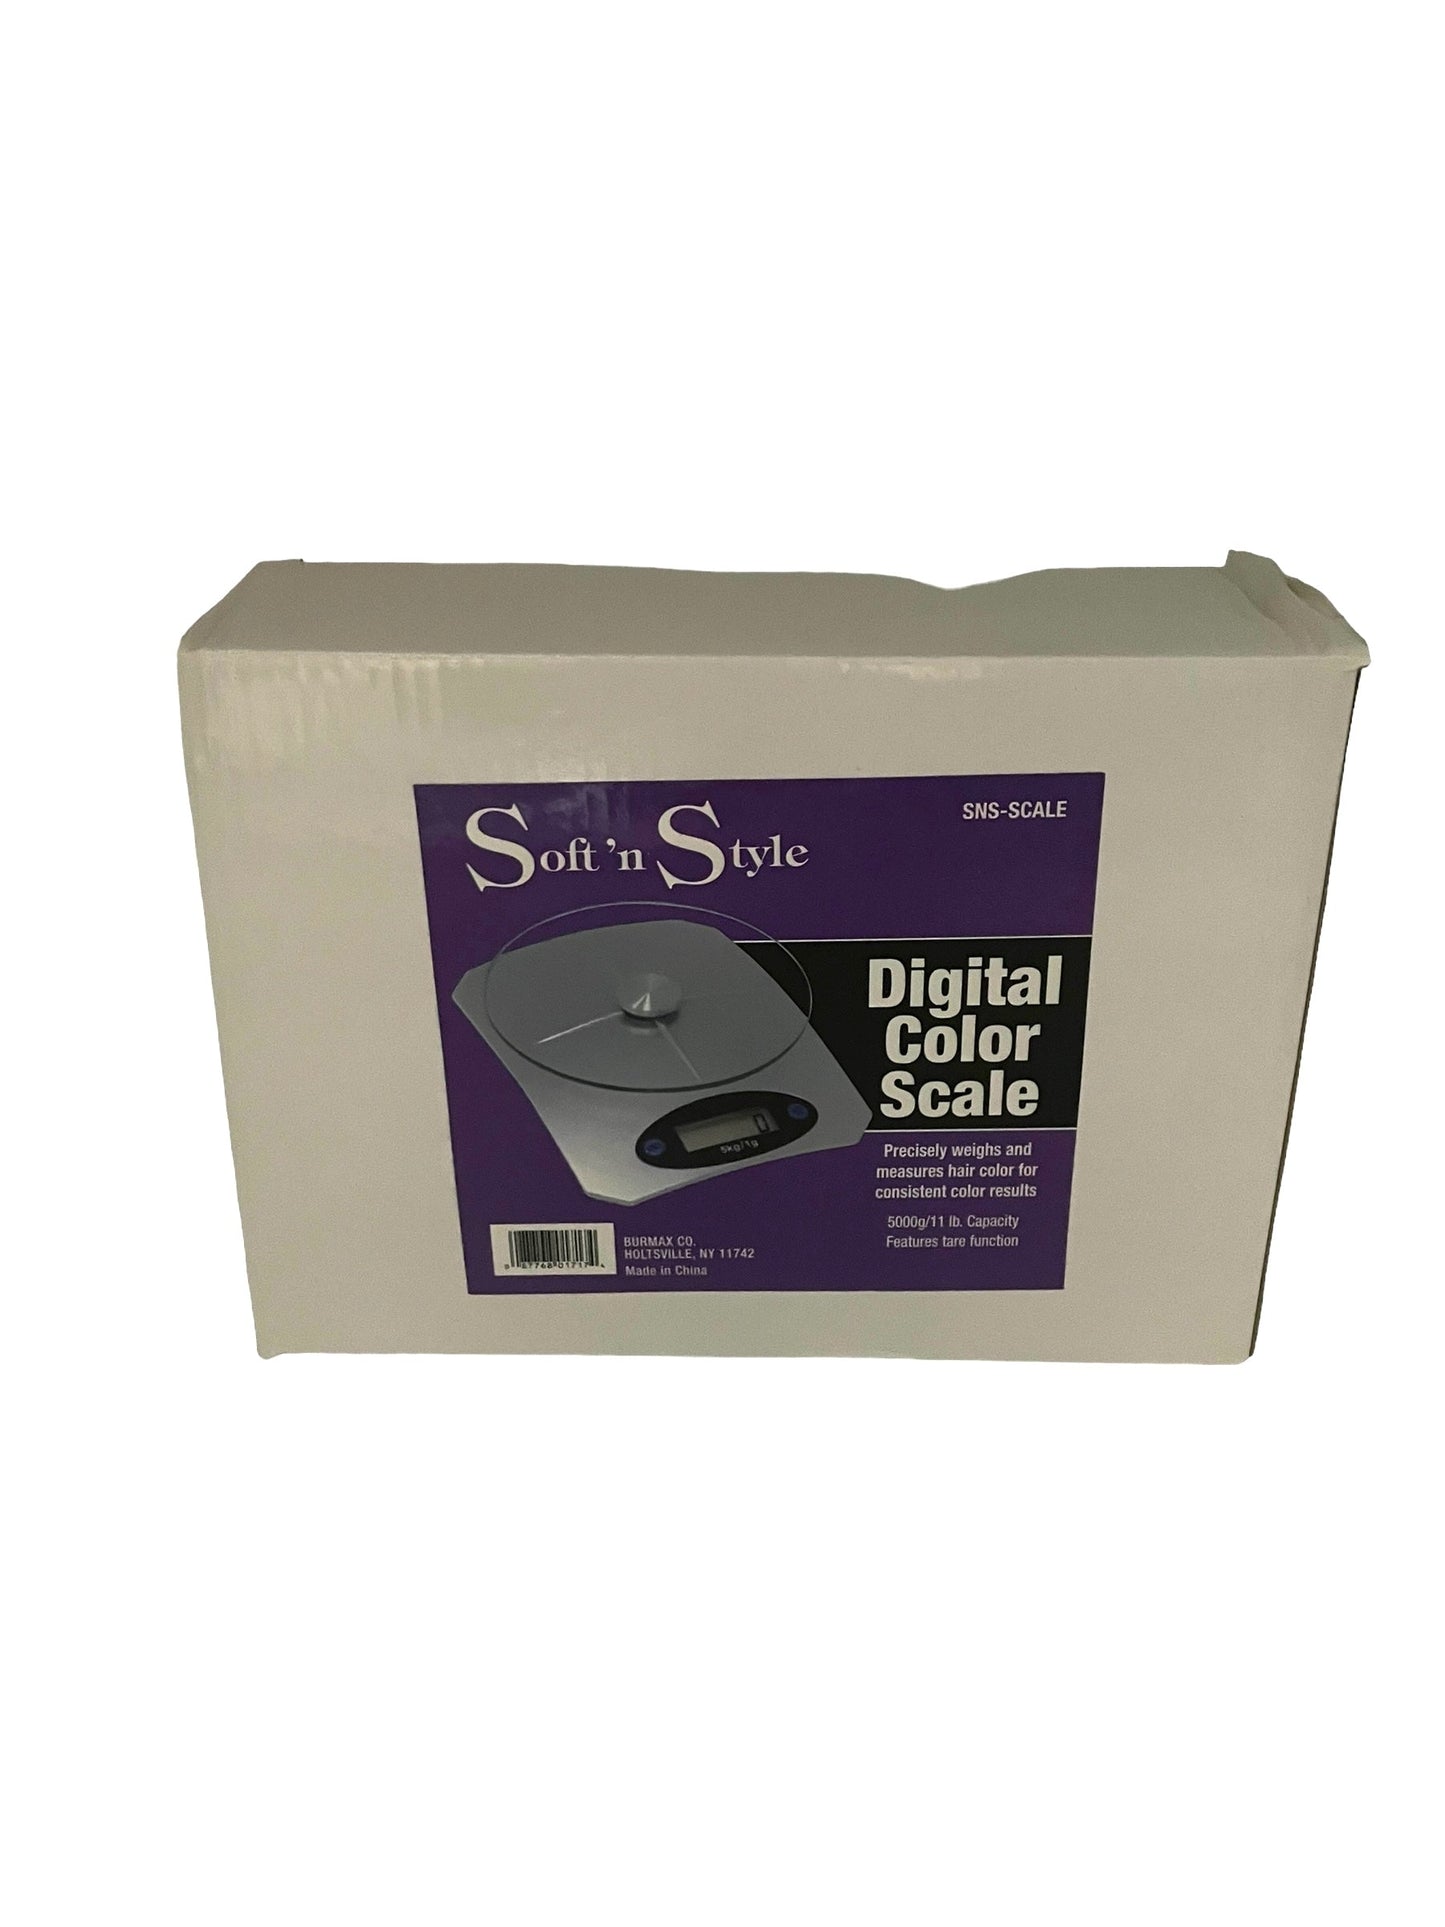 Color Scale Digital Measuring Scales